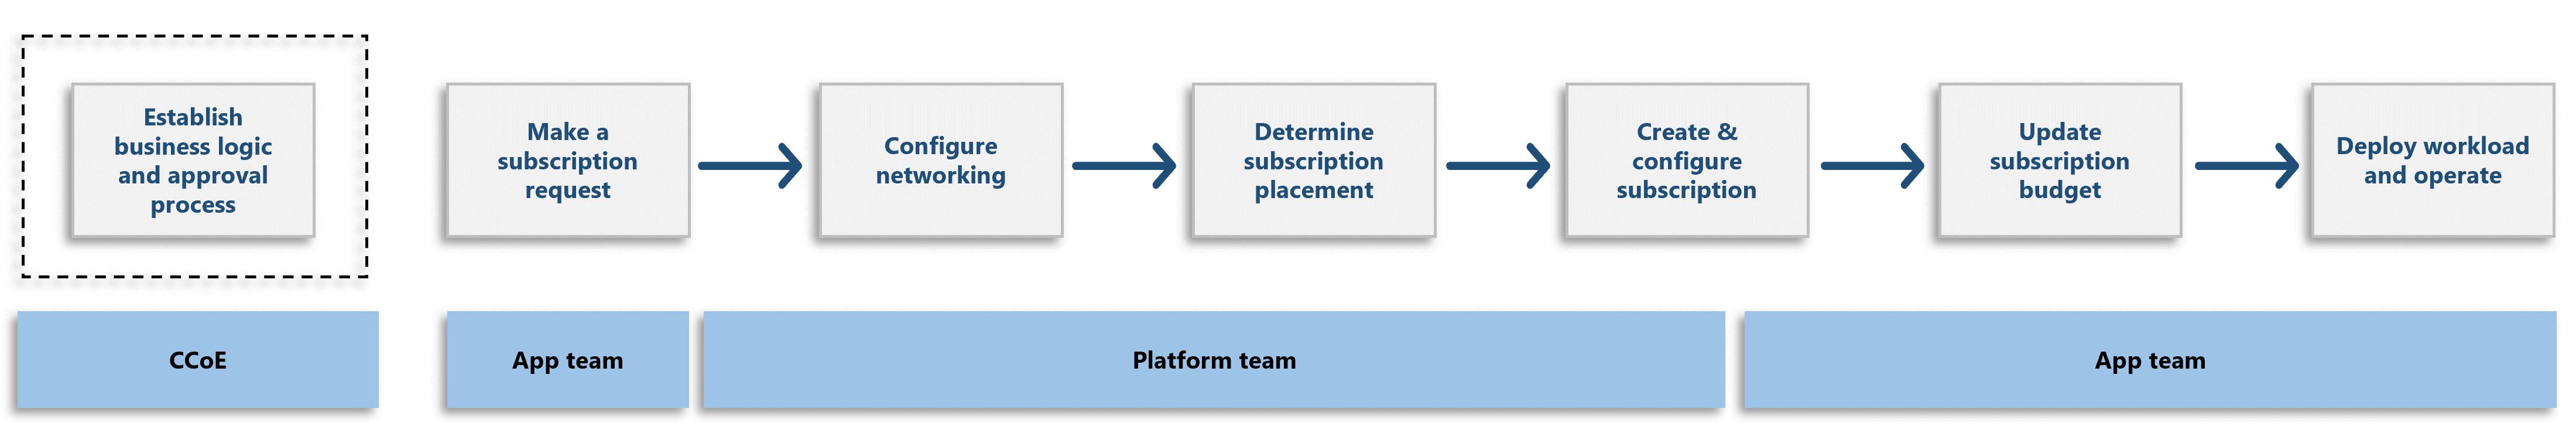 Diagram showing the subscription vending process.